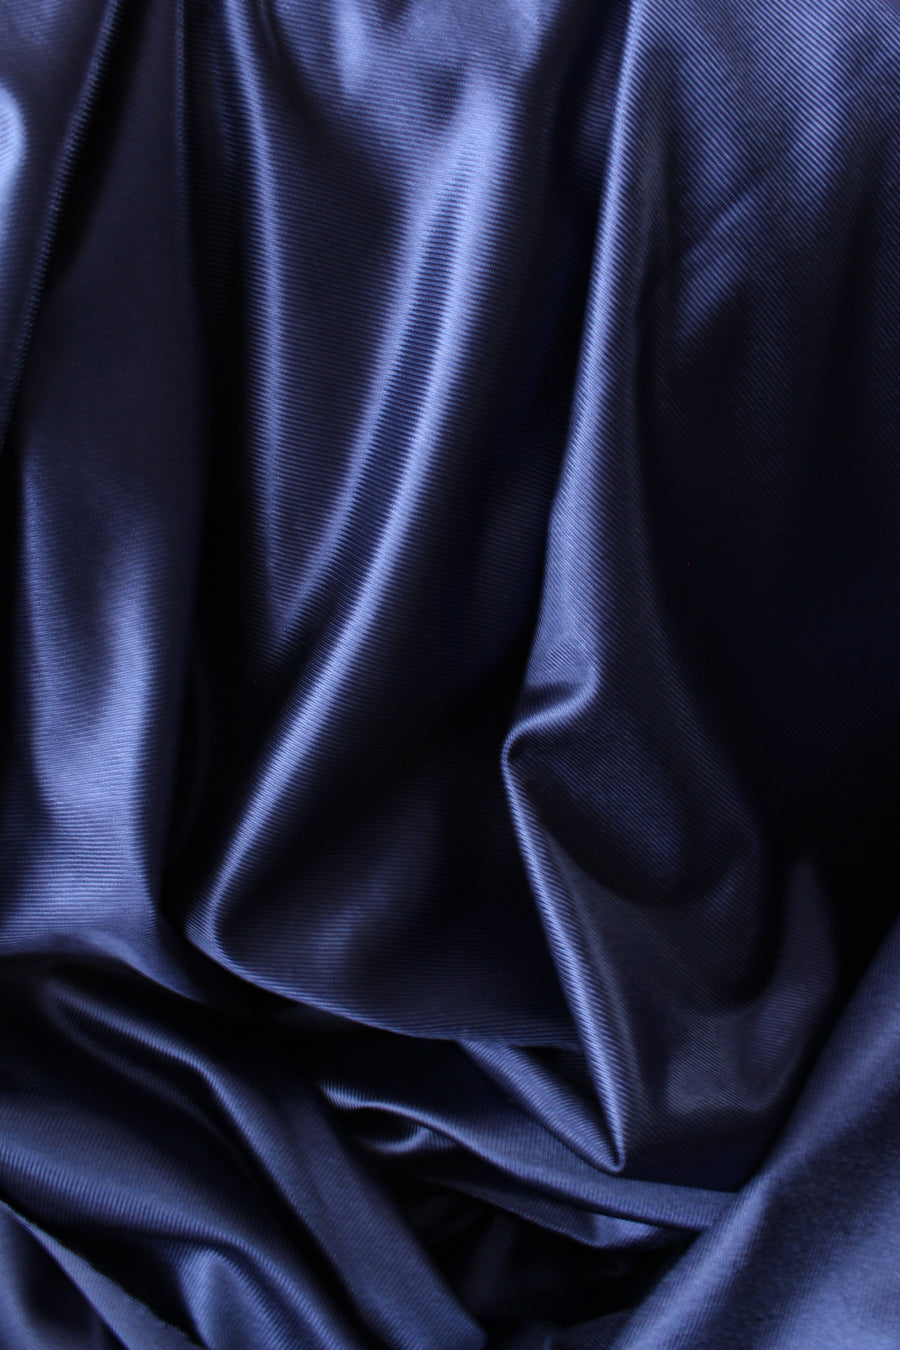 Classic Blue Velveteen Curtain